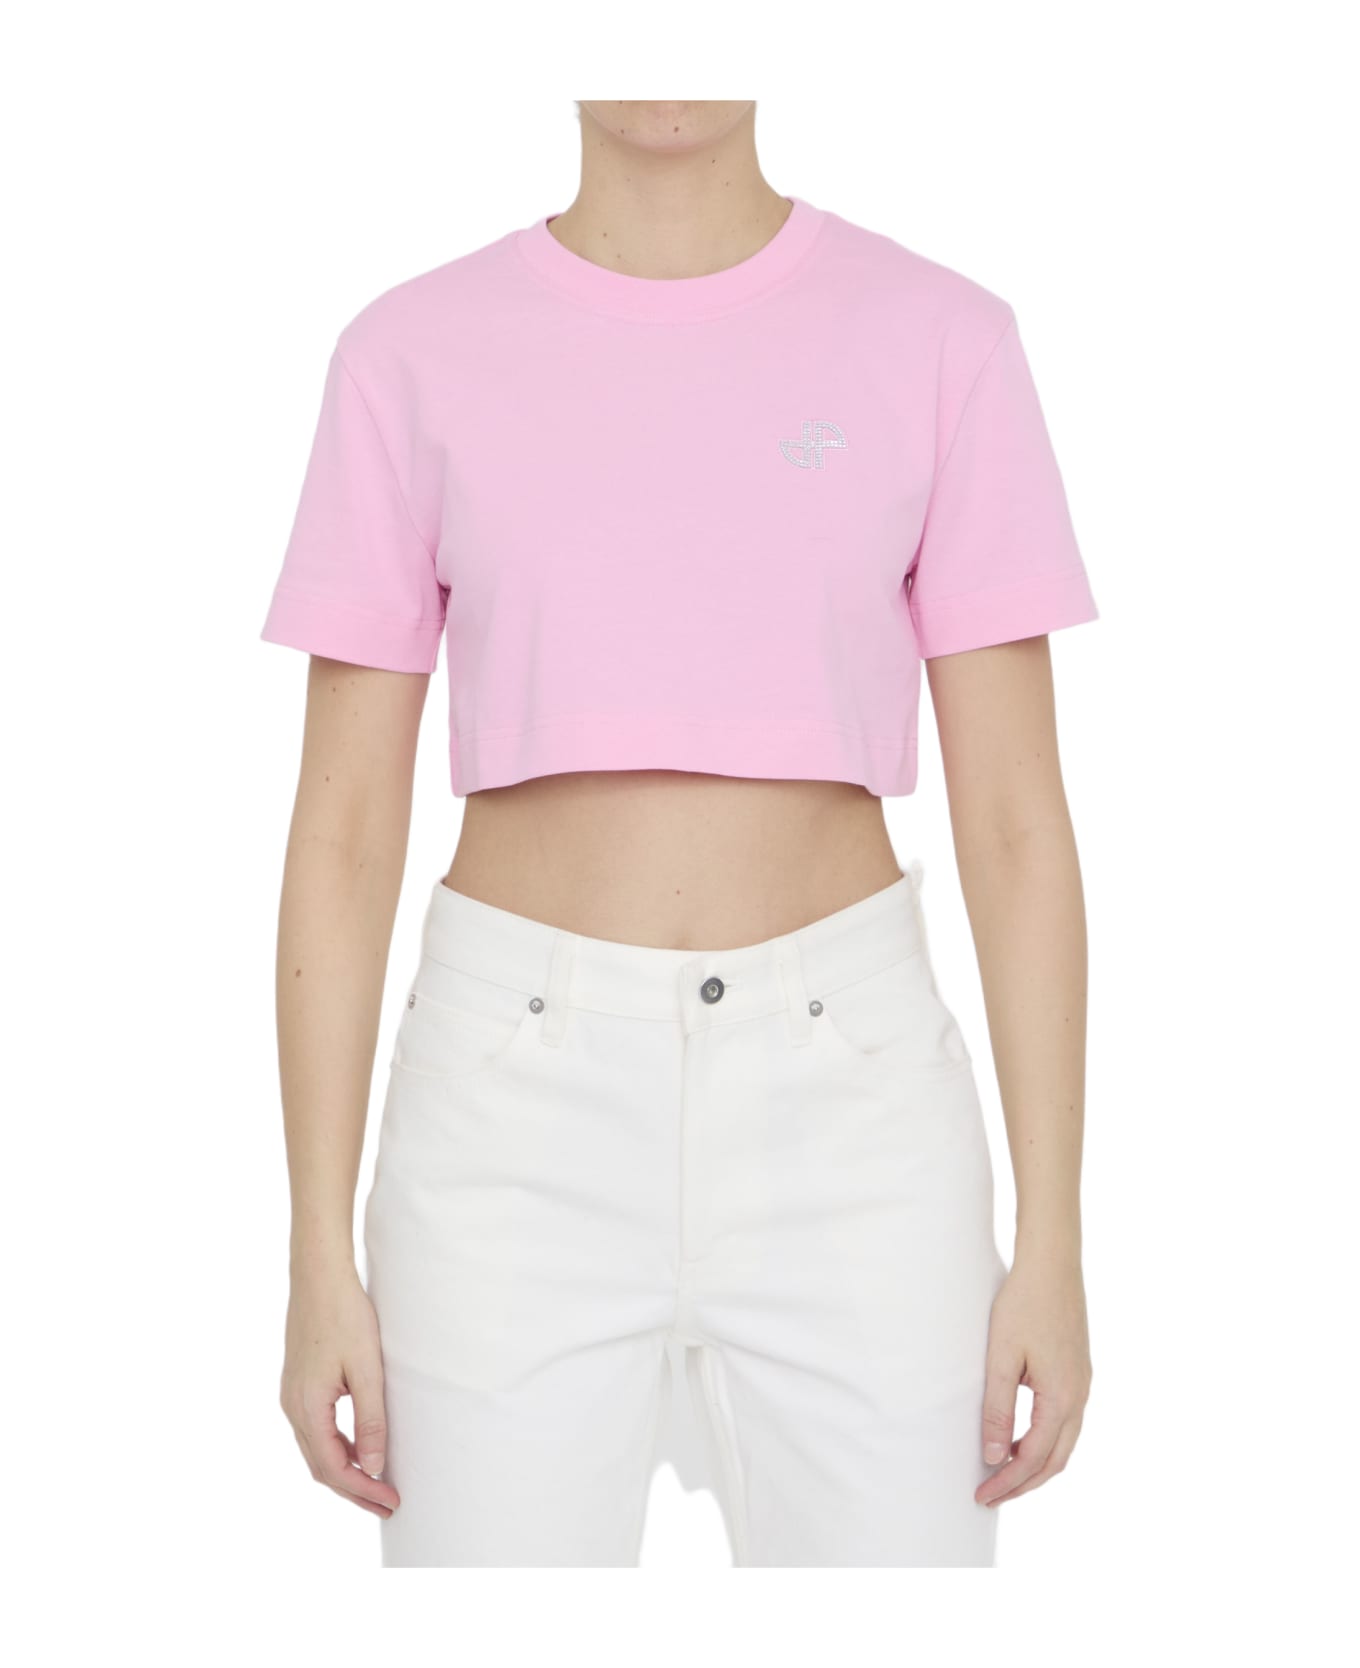 Patou Cropped T-shirt - P Pink